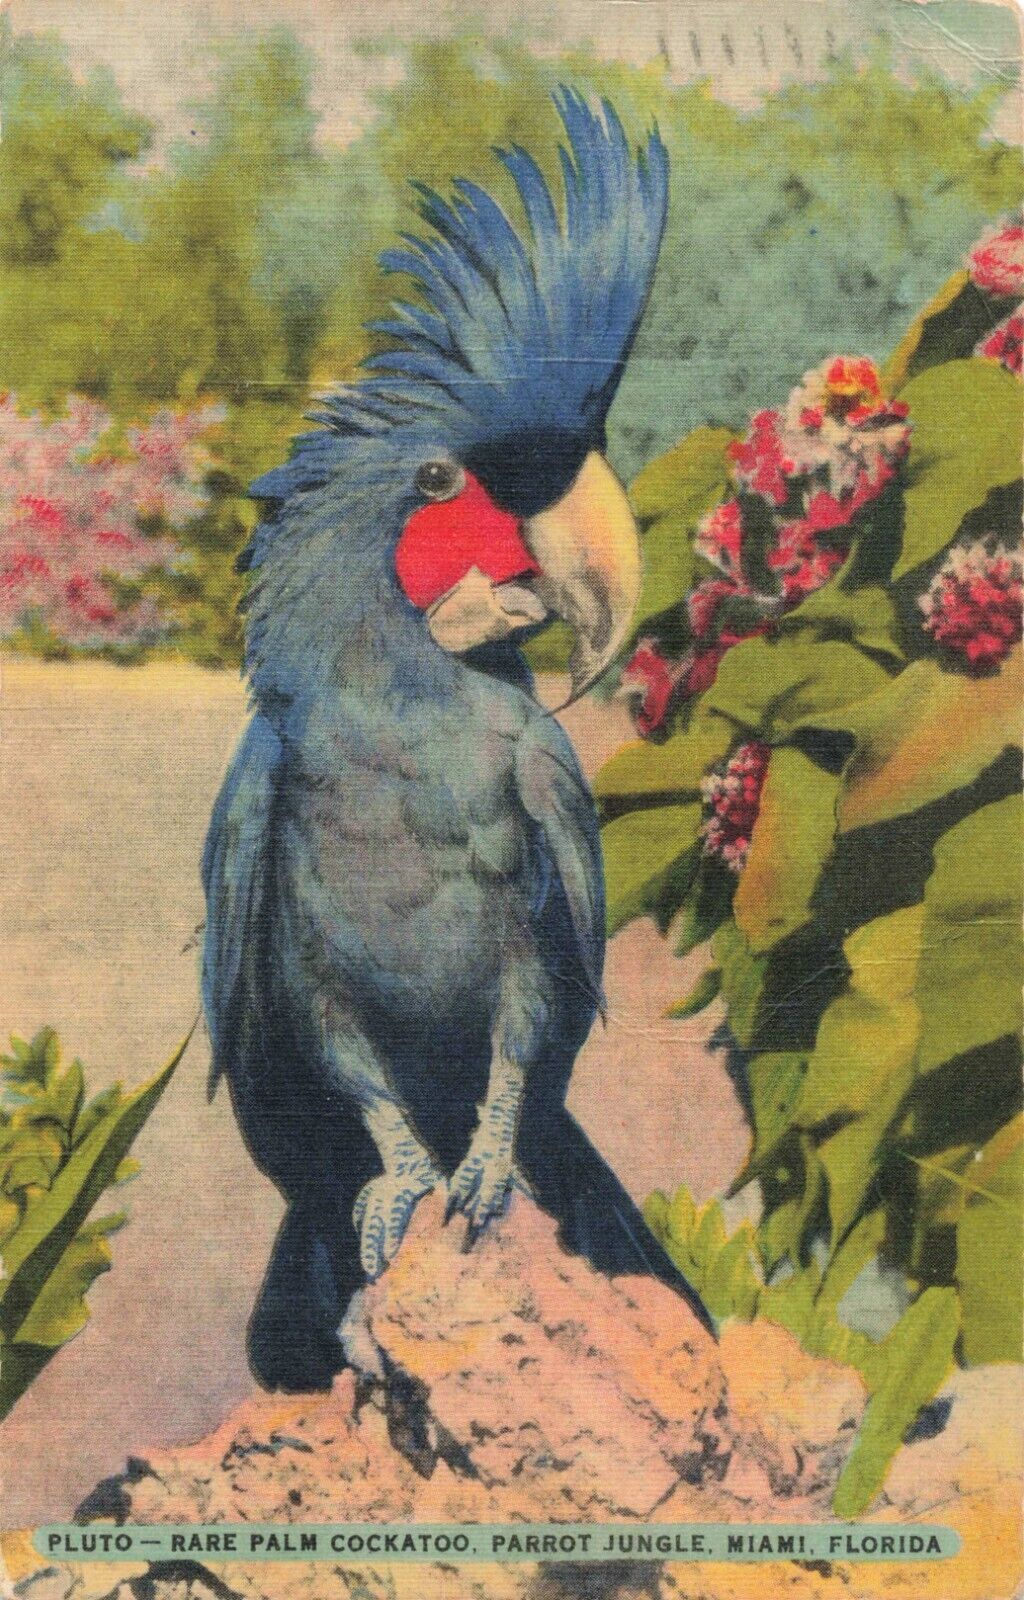 Miami Florida, Pluto the Rare Palm Cockatoo at Parrot Jungle, Vintage Postcard